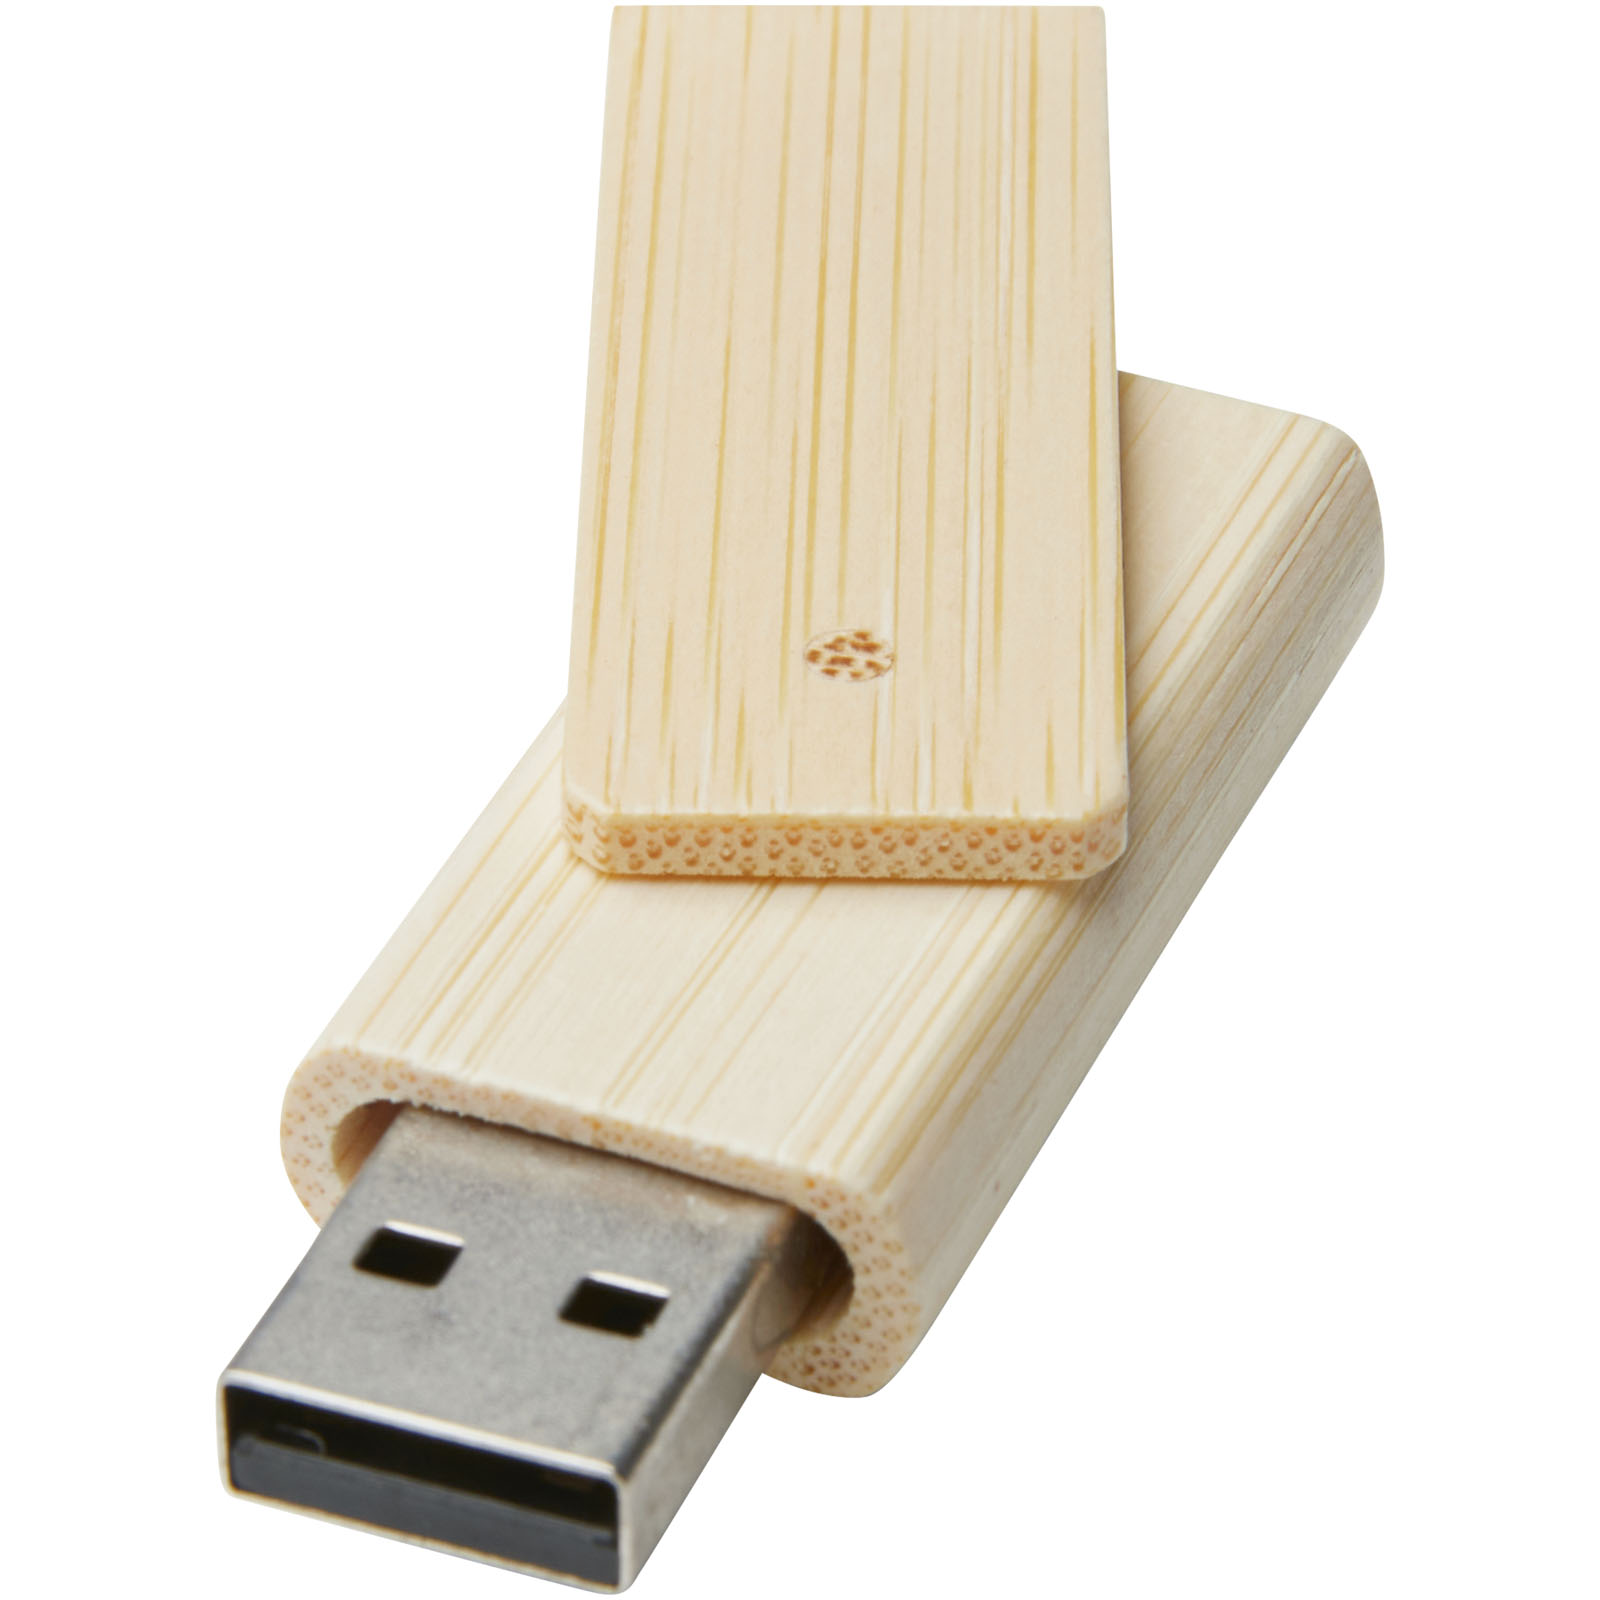 Technology - Rotate 16GB bamboo USB flash drive